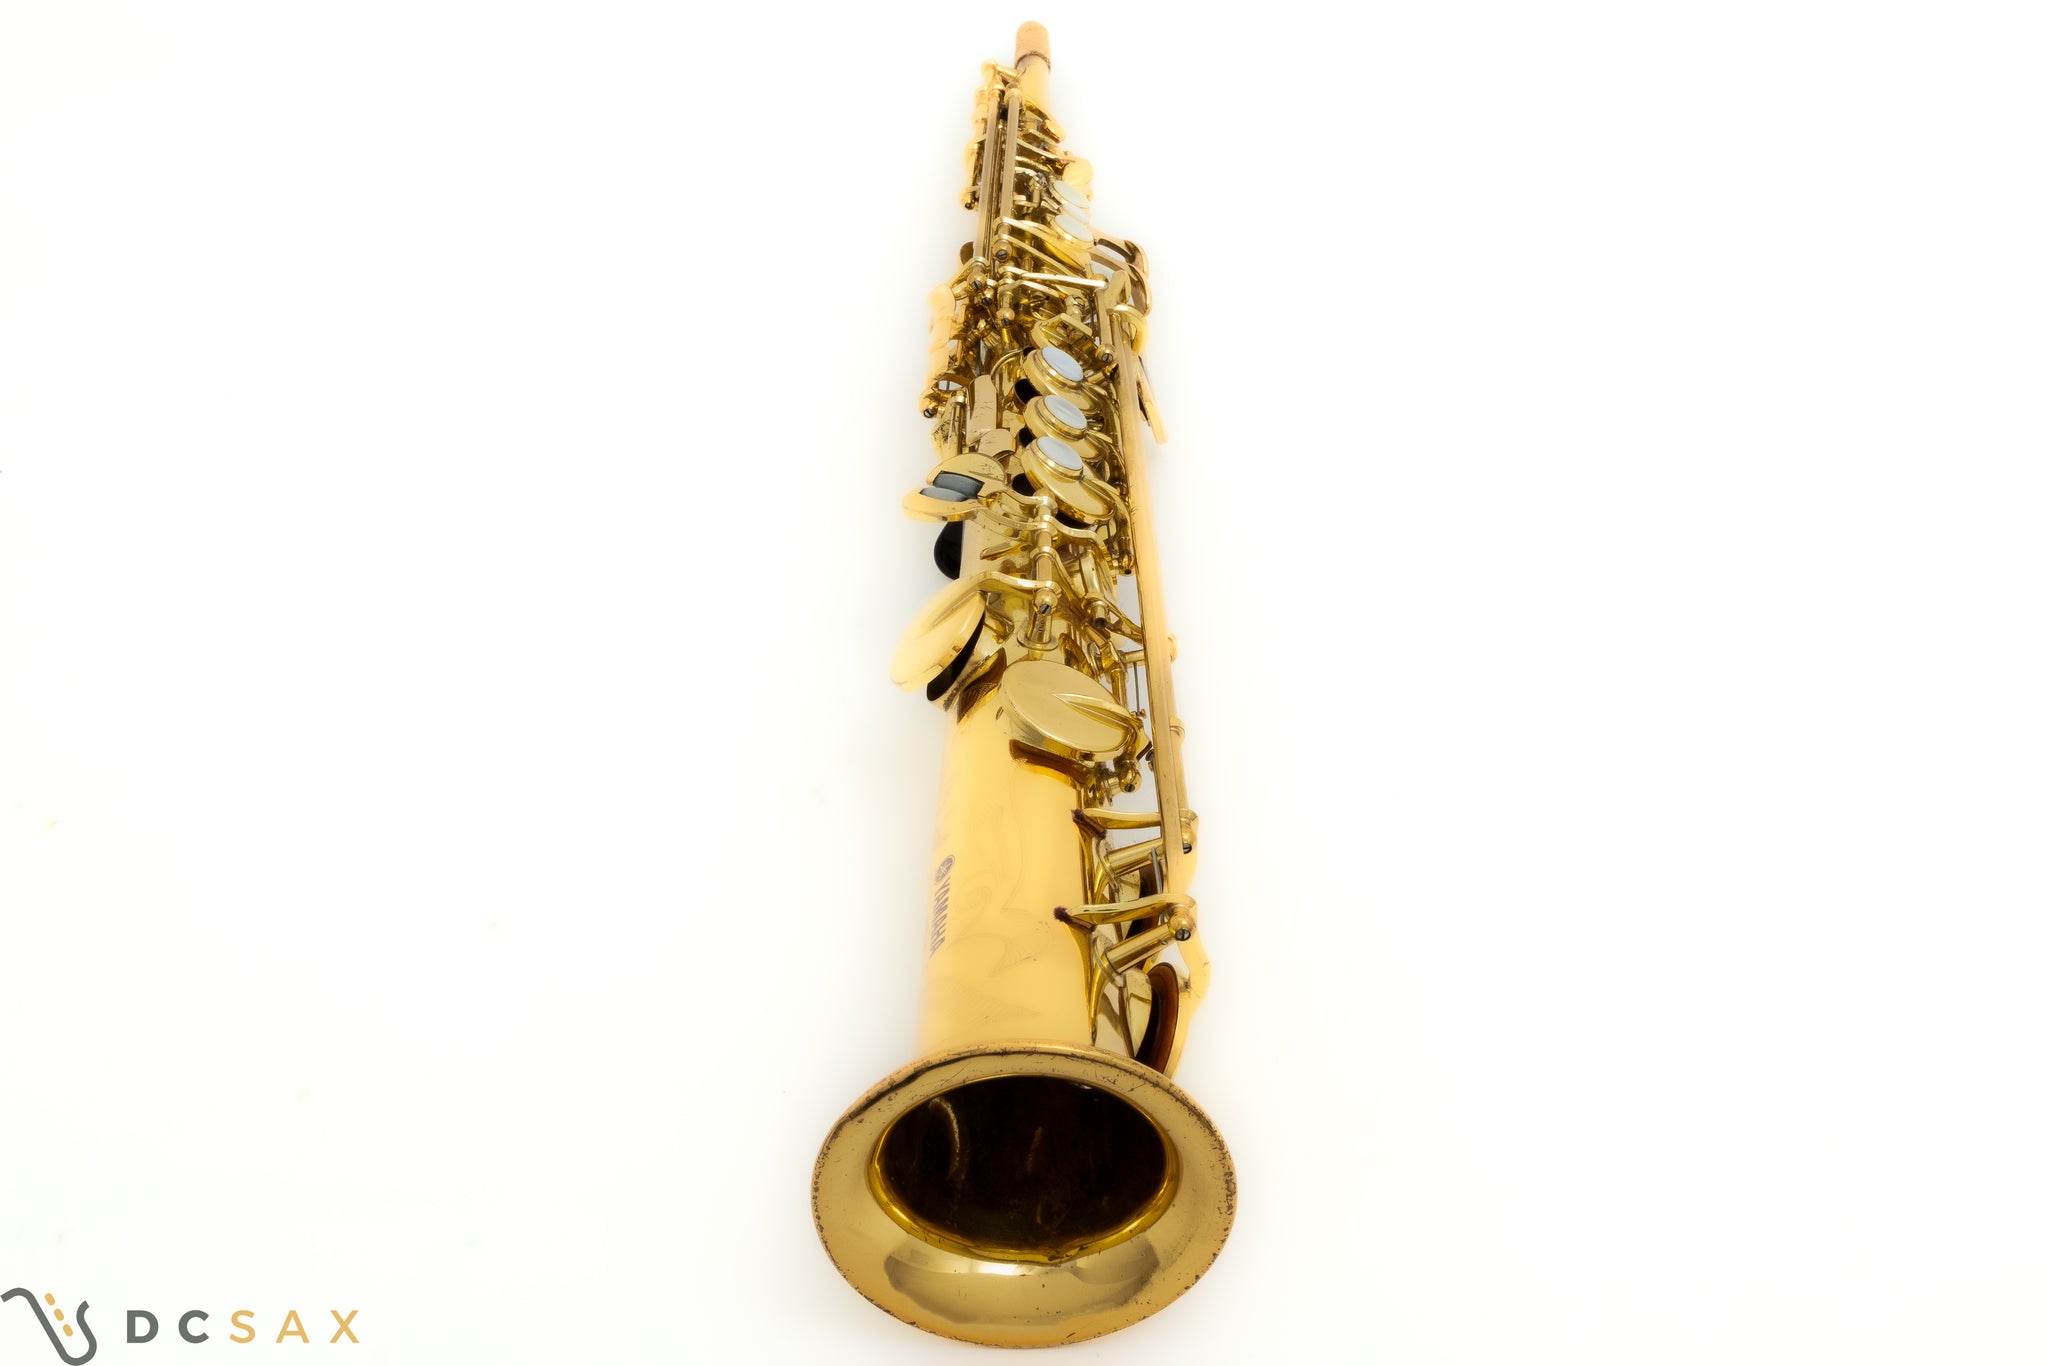 Purple Label Yamaha YSS-62 Soprano Saxophone, Video